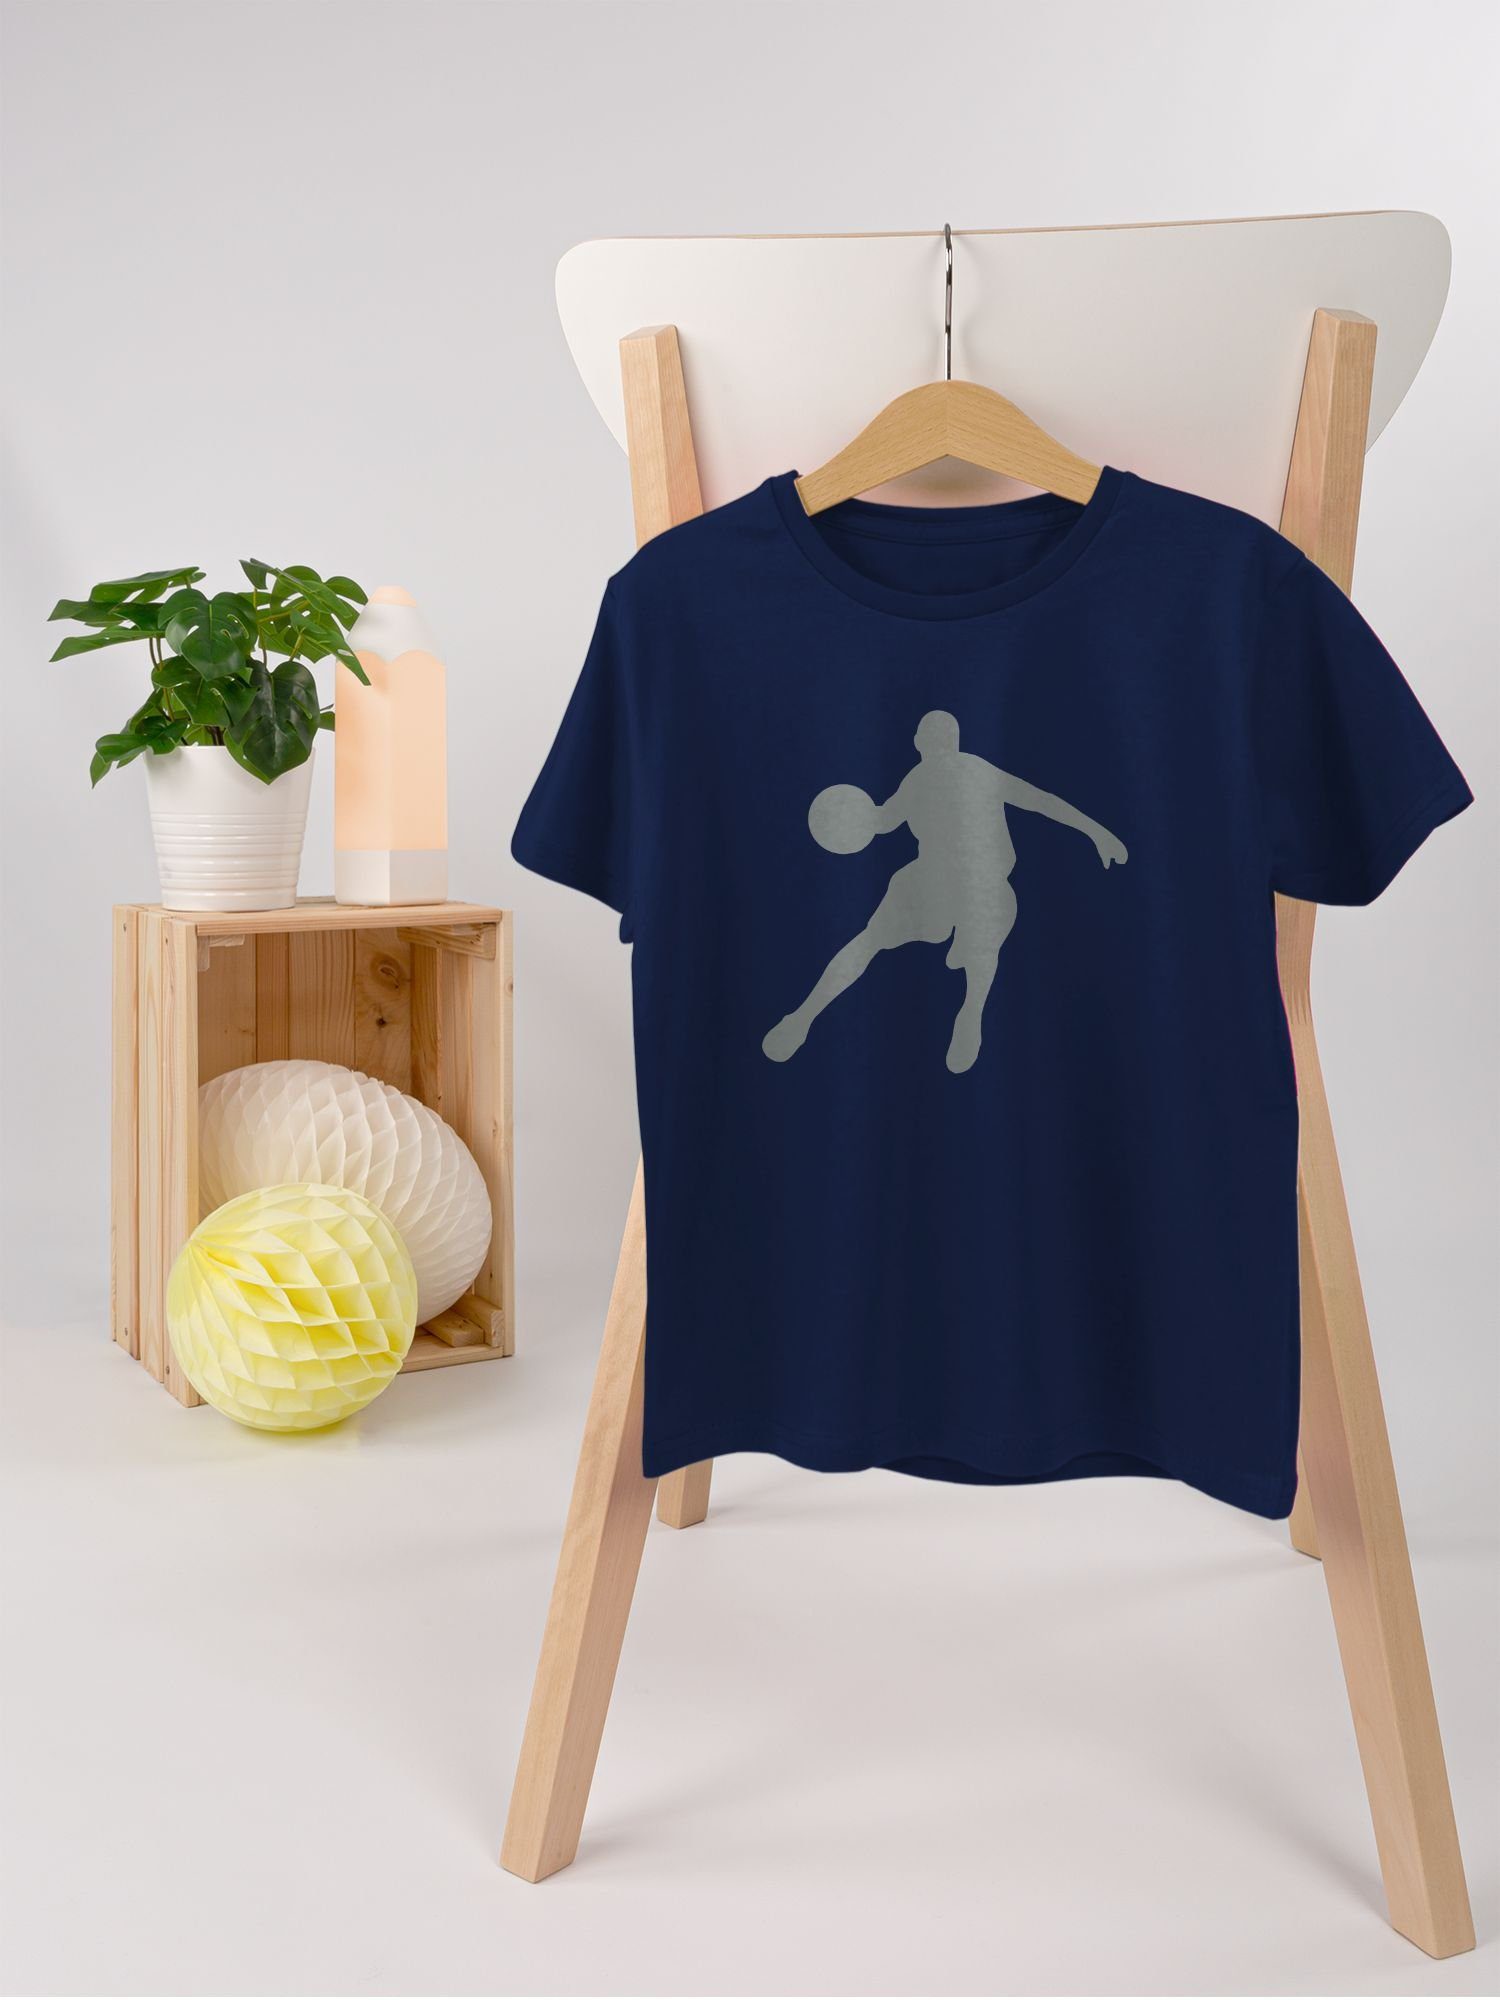 Shirtracer T-Shirt Basketballspieler Kinder 03 Sport Dunkelblau Kleidung